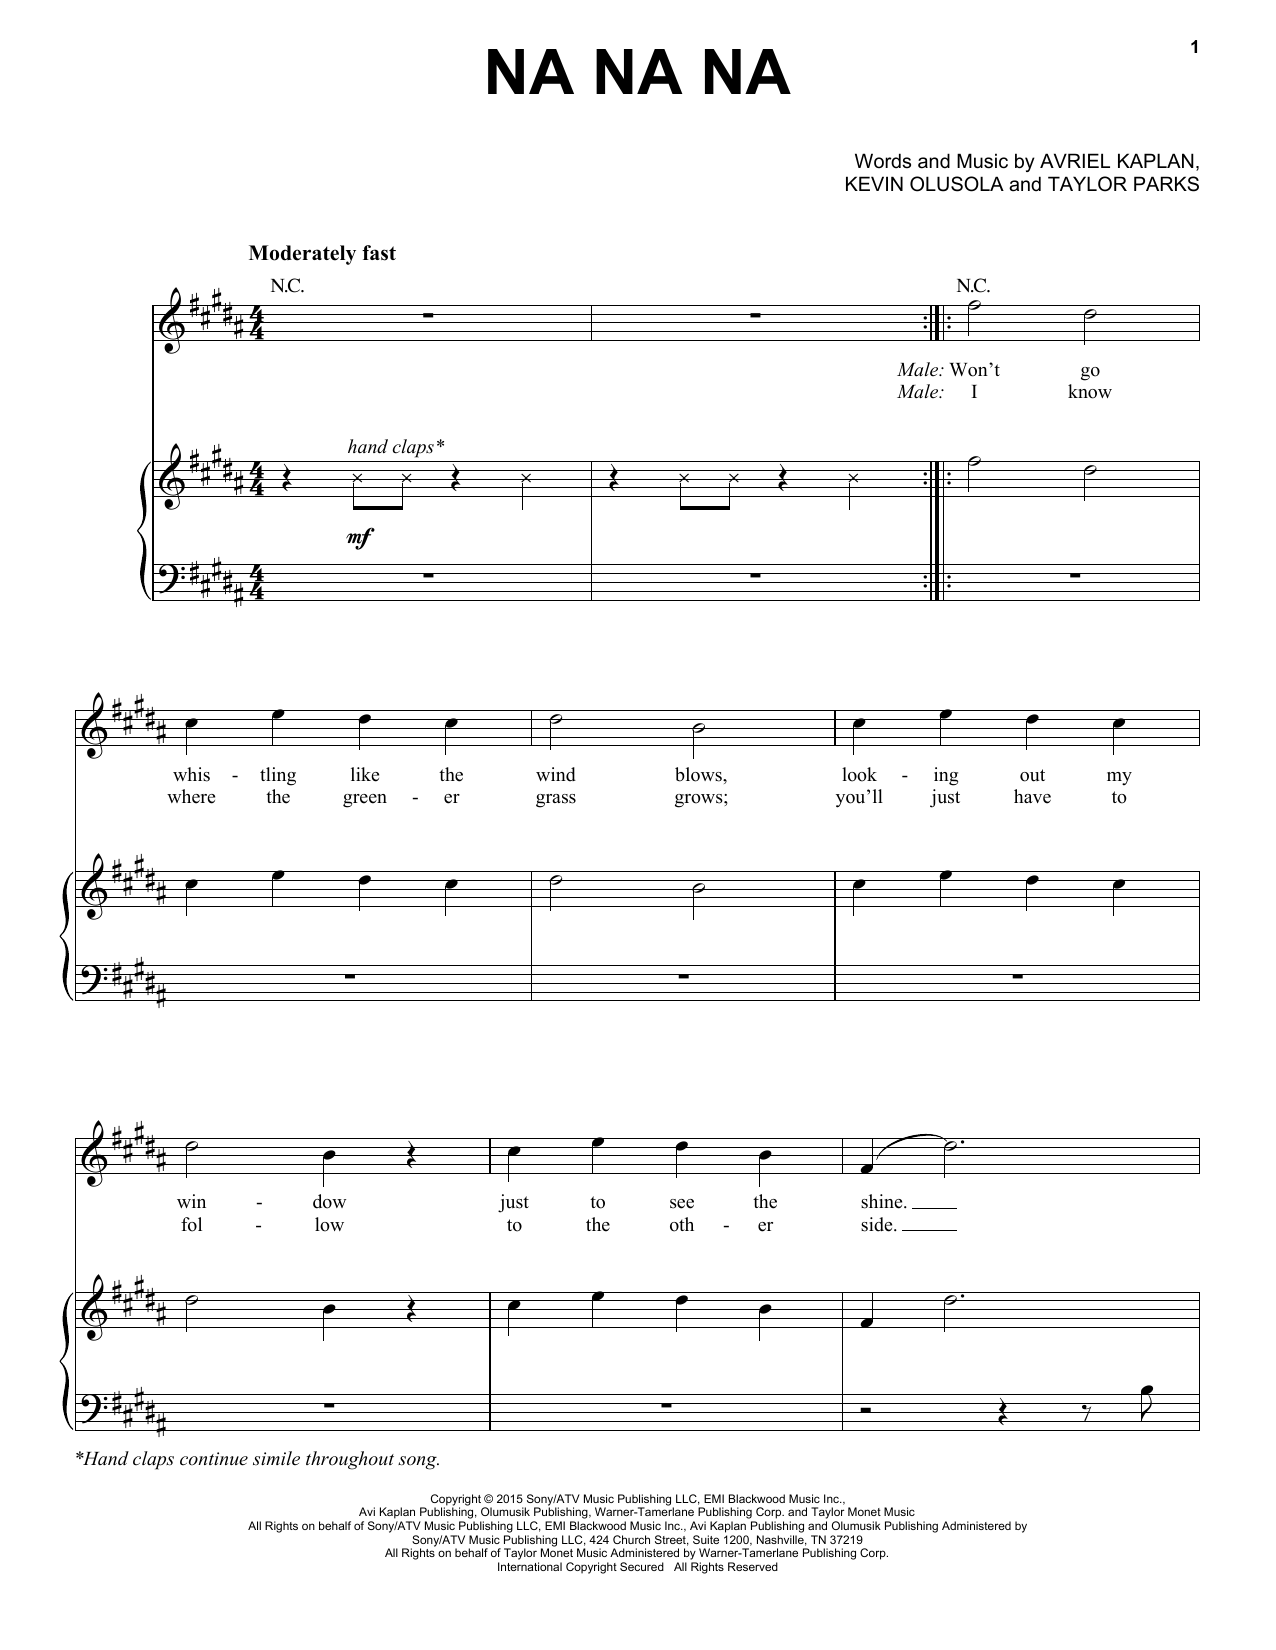 Pentatonix Na Na Na Sheet Music Notes & Chords for Piano, Vocal & Guitar (Right-Hand Melody) - Download or Print PDF